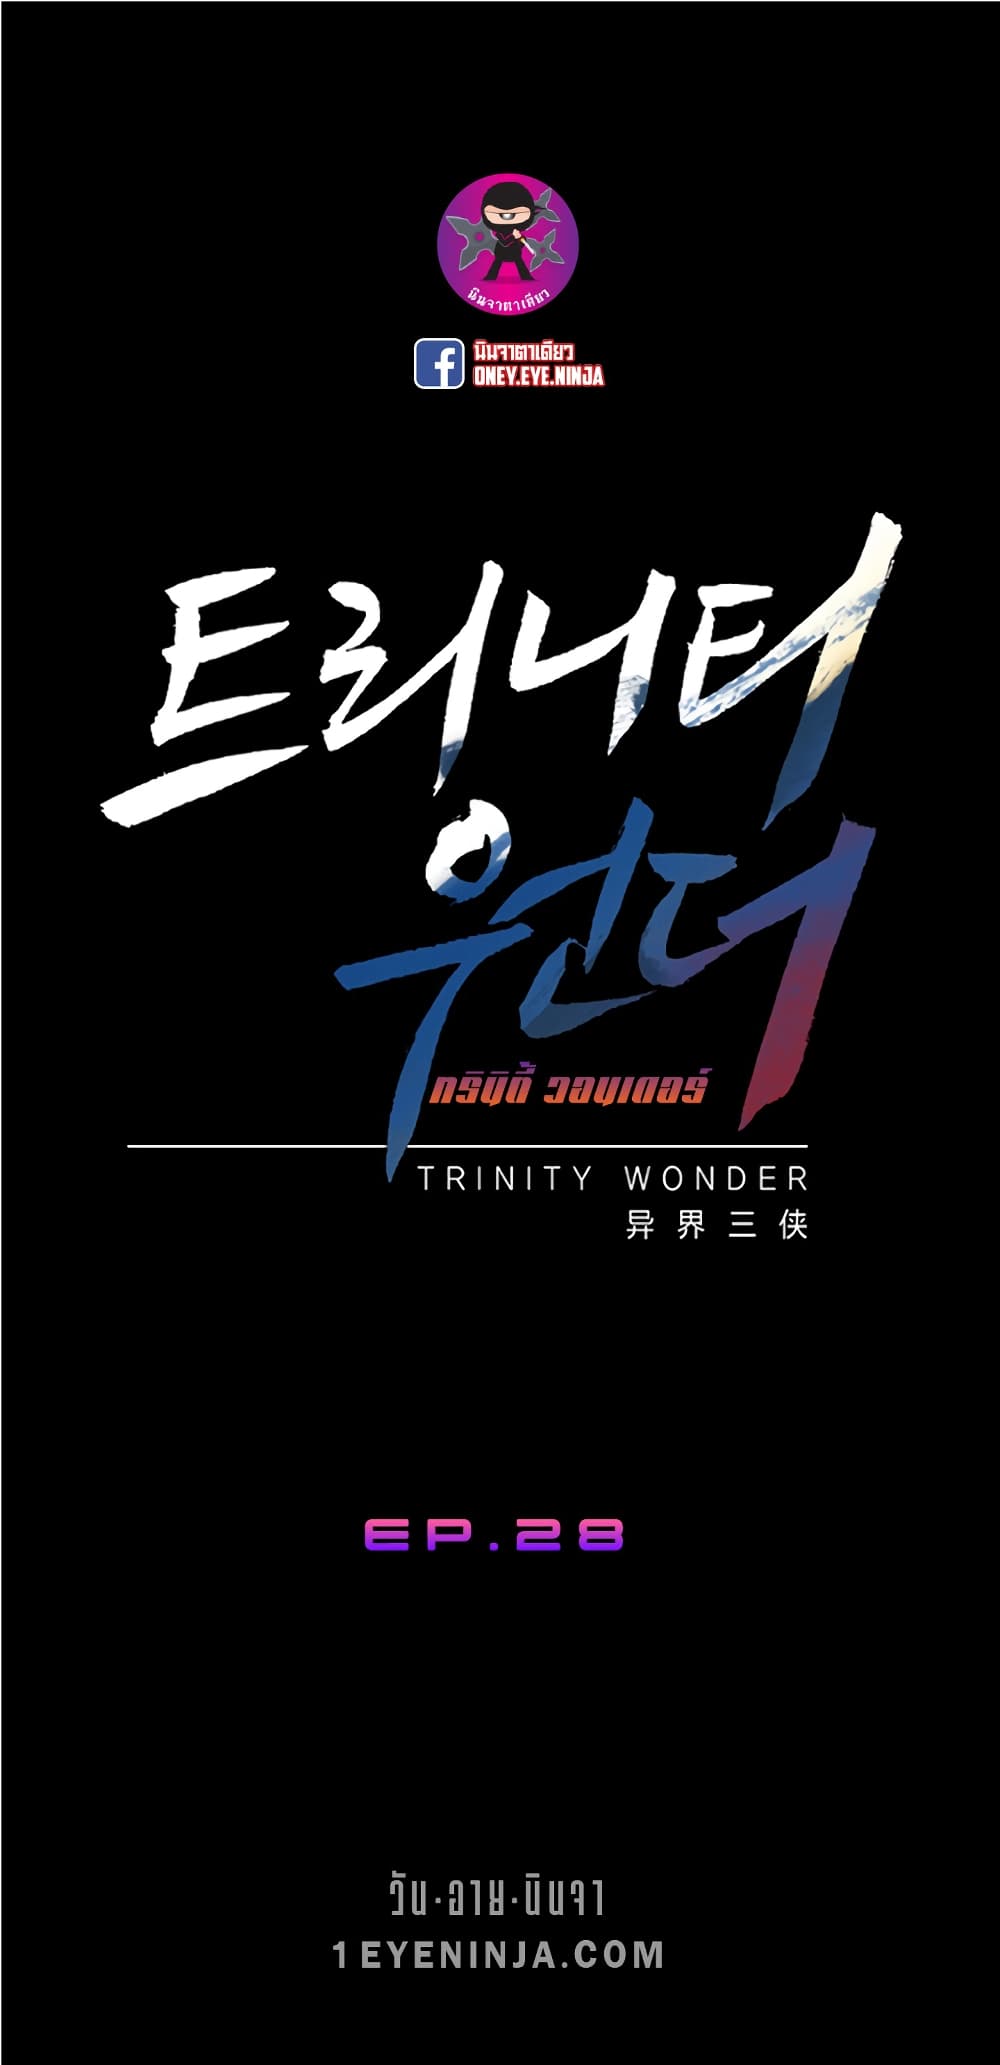 Trinity Wonder 28 (2)